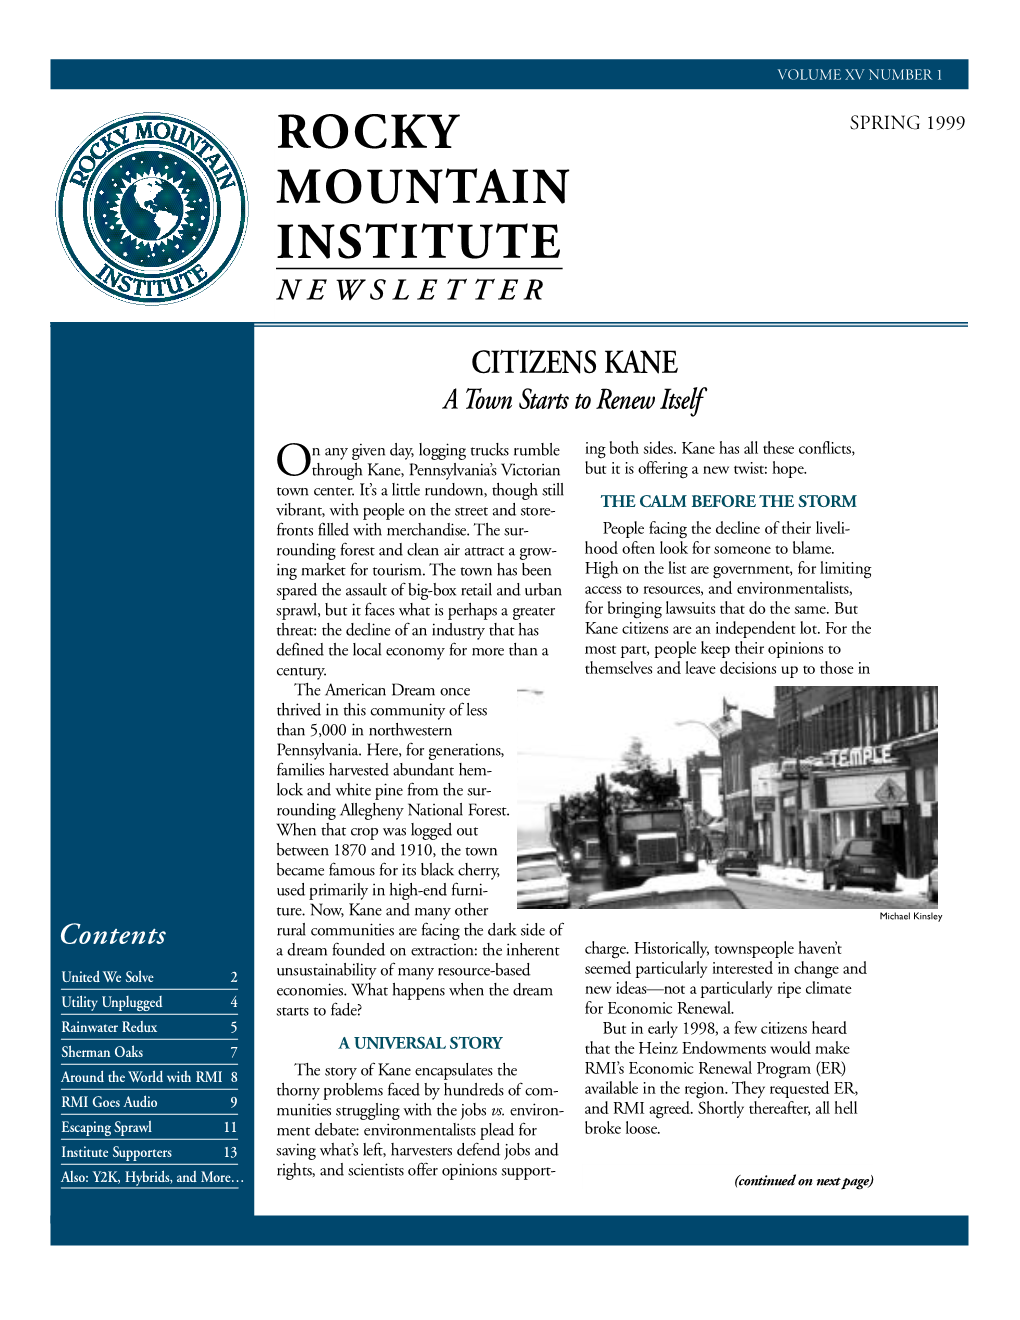 Rocky Mountain Institute Spring 1999 Newsletter